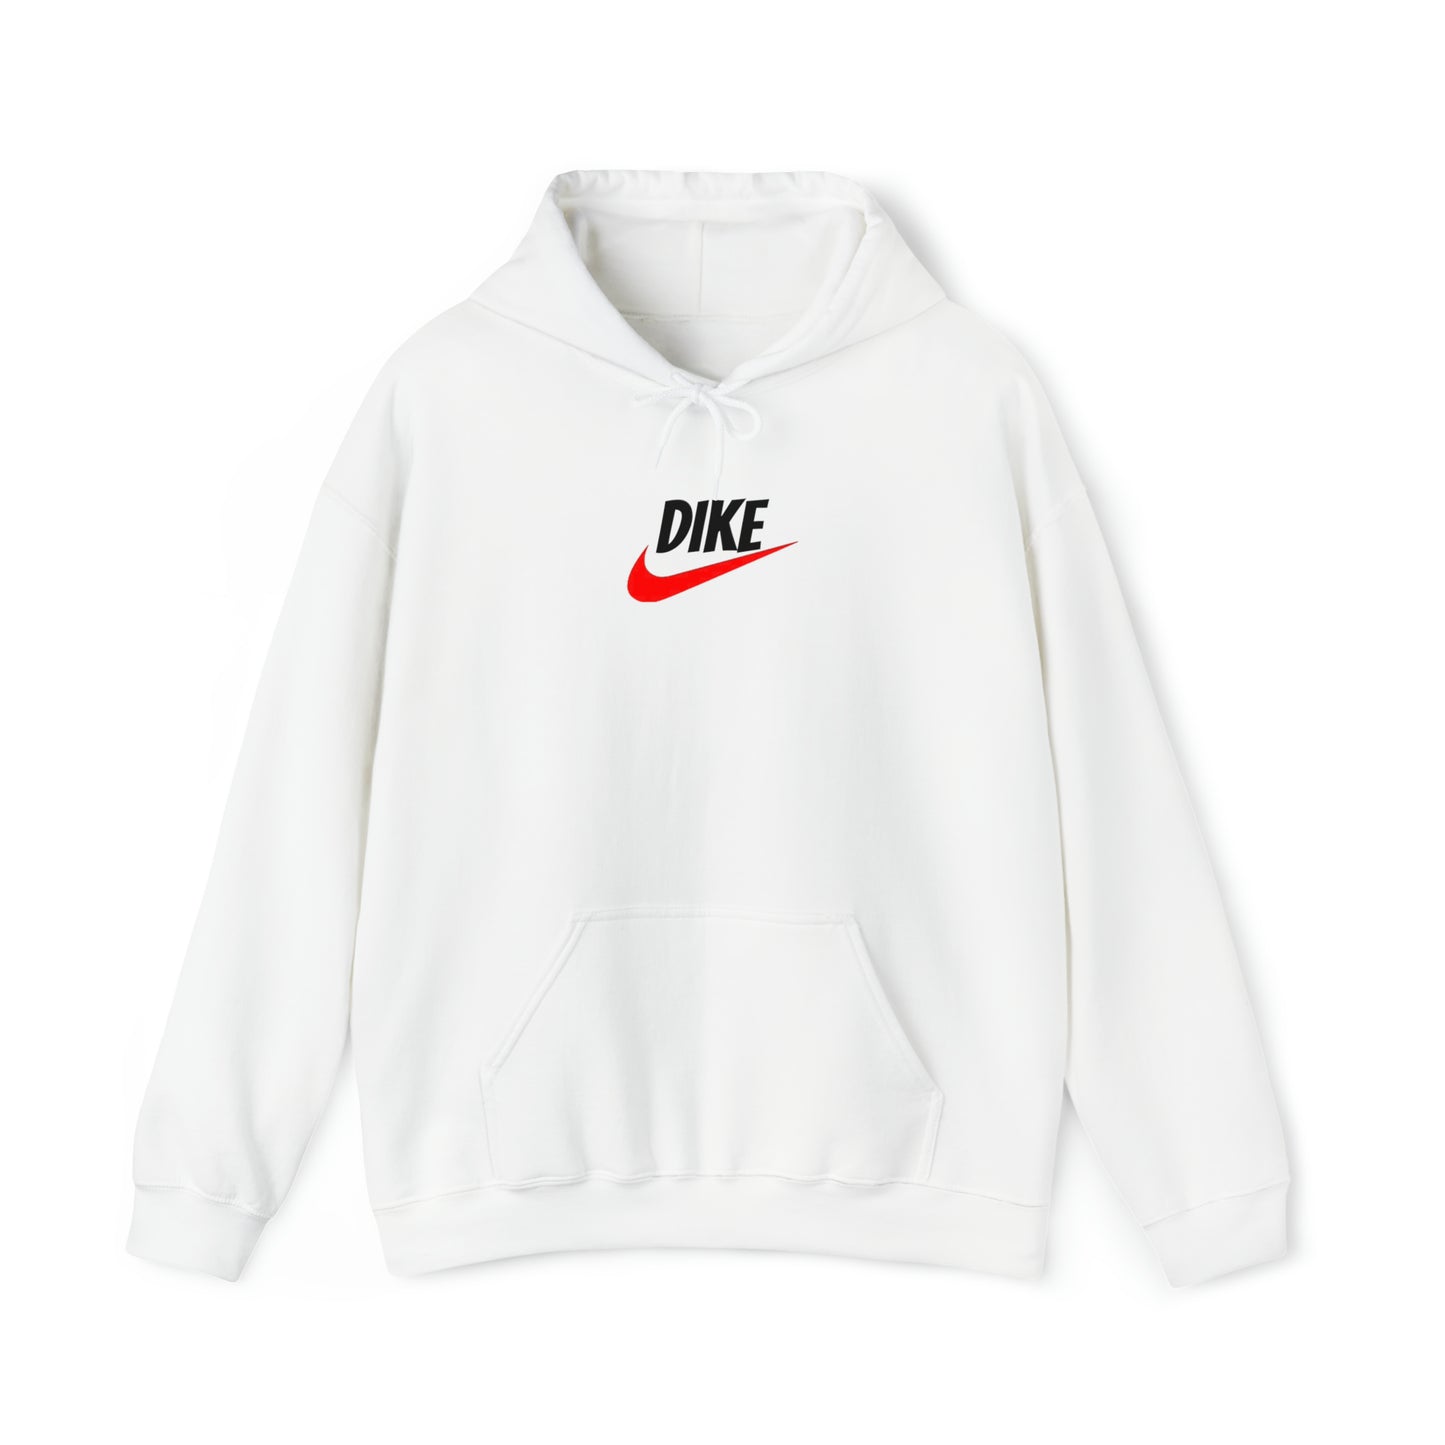 "Dike" Sweatshirt White